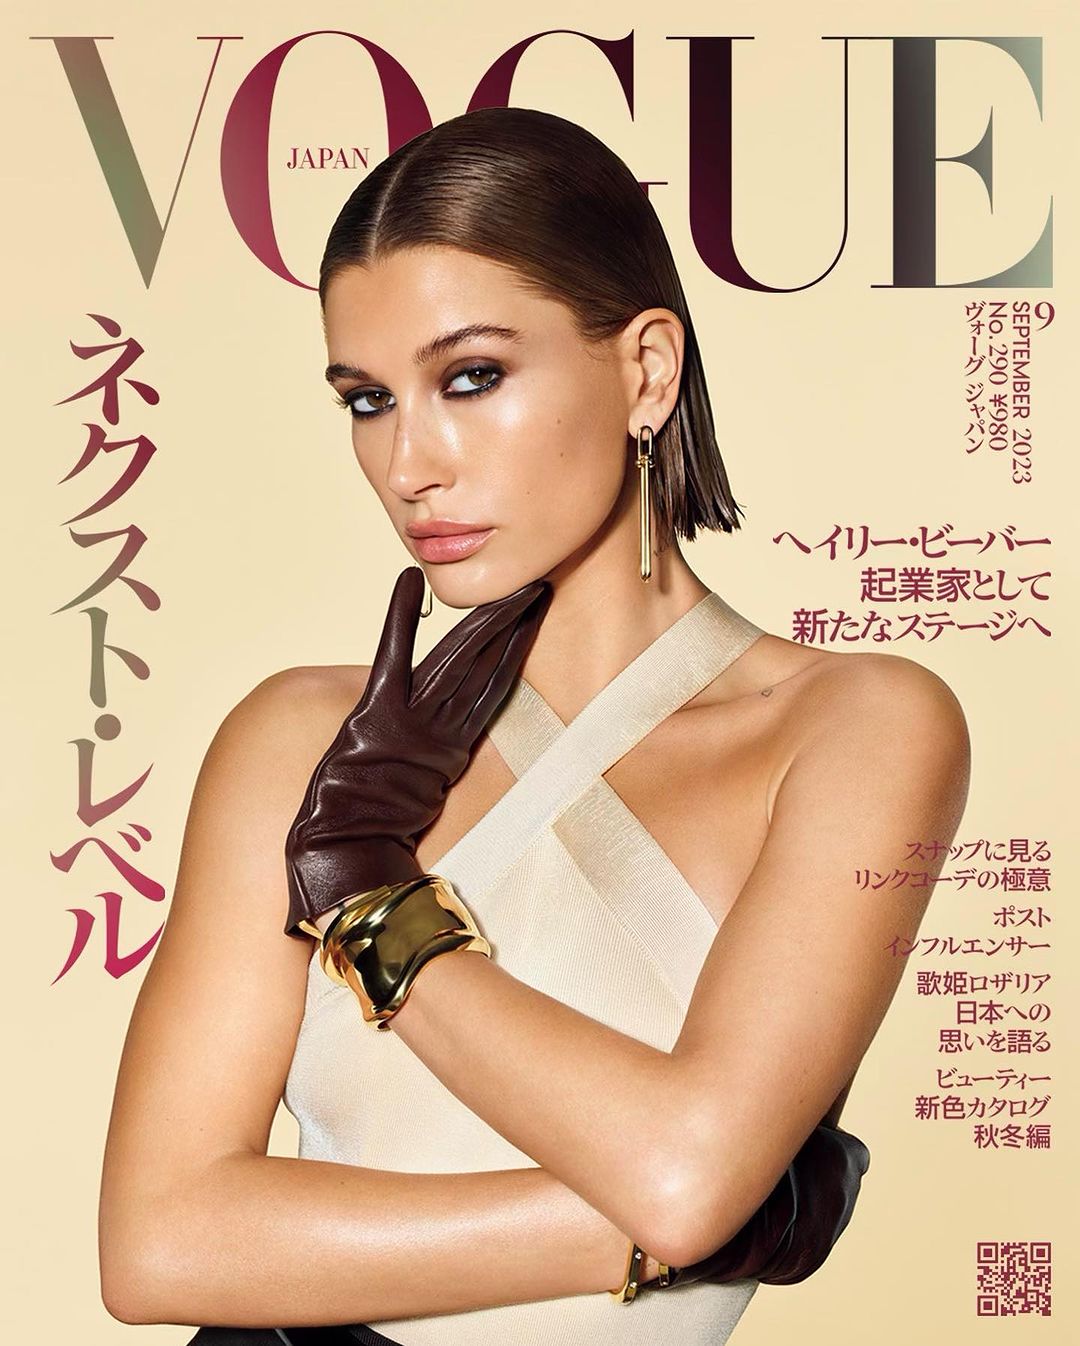 Гейлі Бібер прикрасила обкладинку Vogue Japan